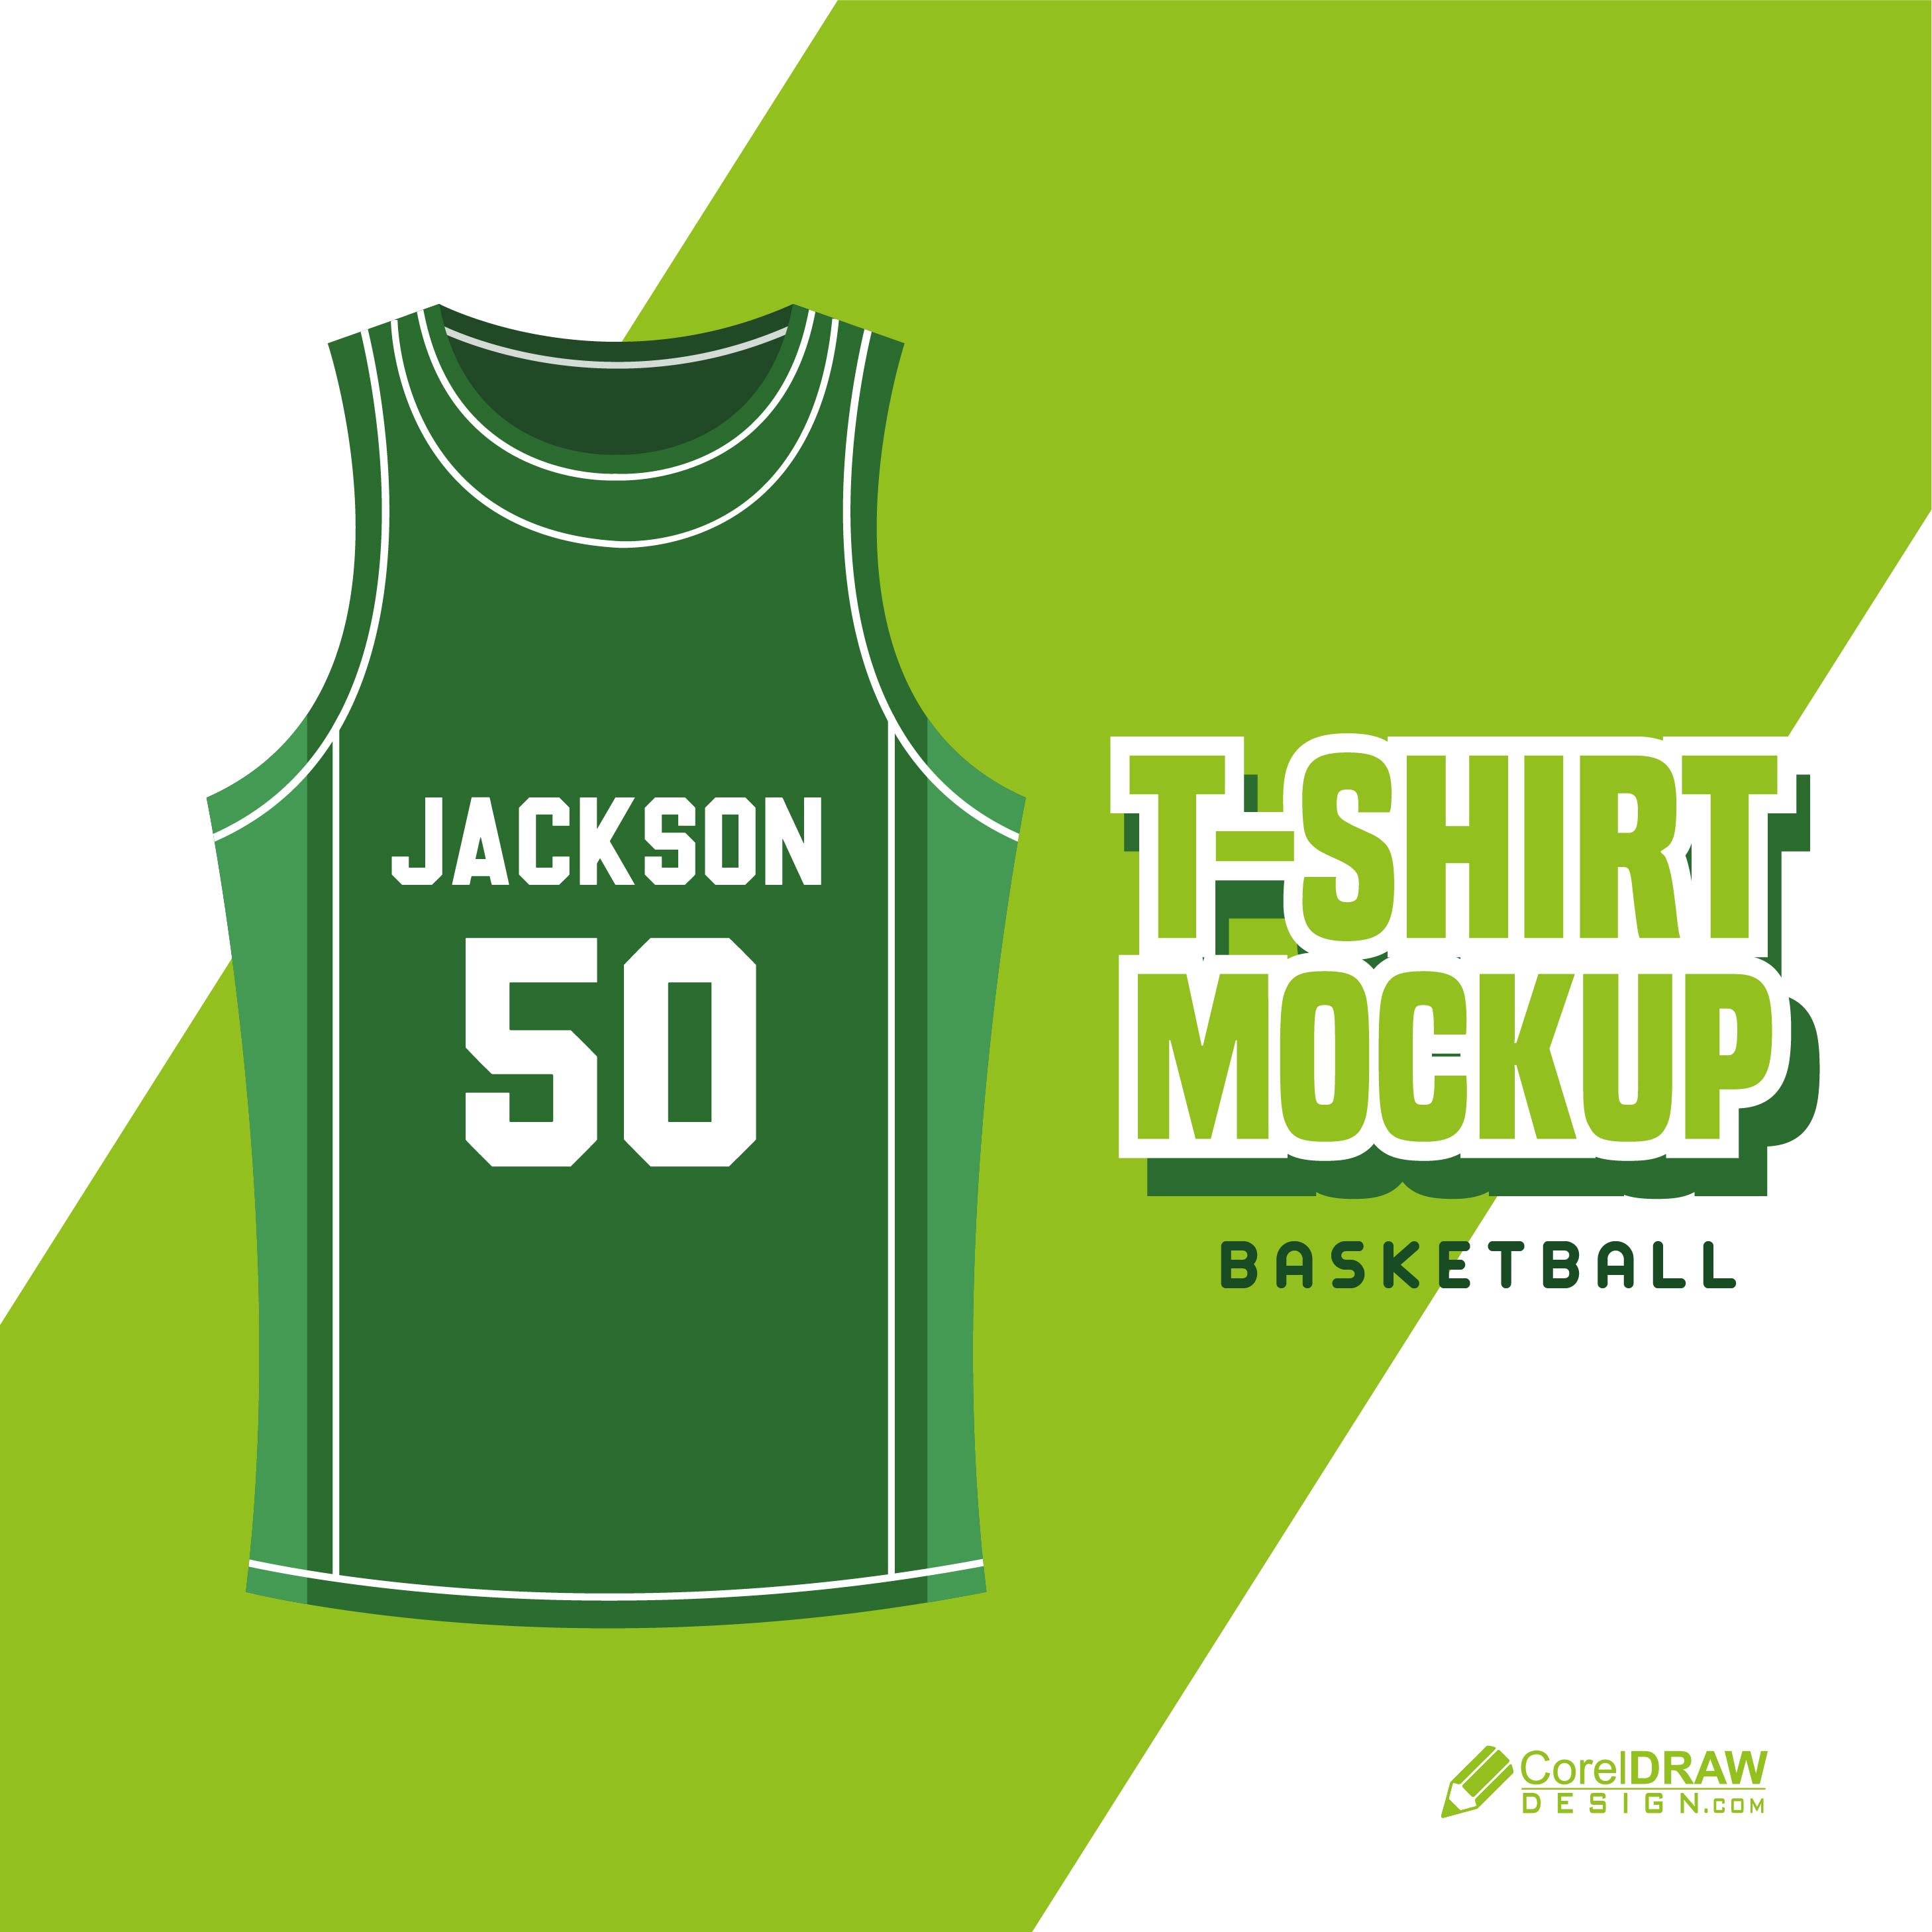 Basketball jersey mockup Vectors & Illustrations for Free Download